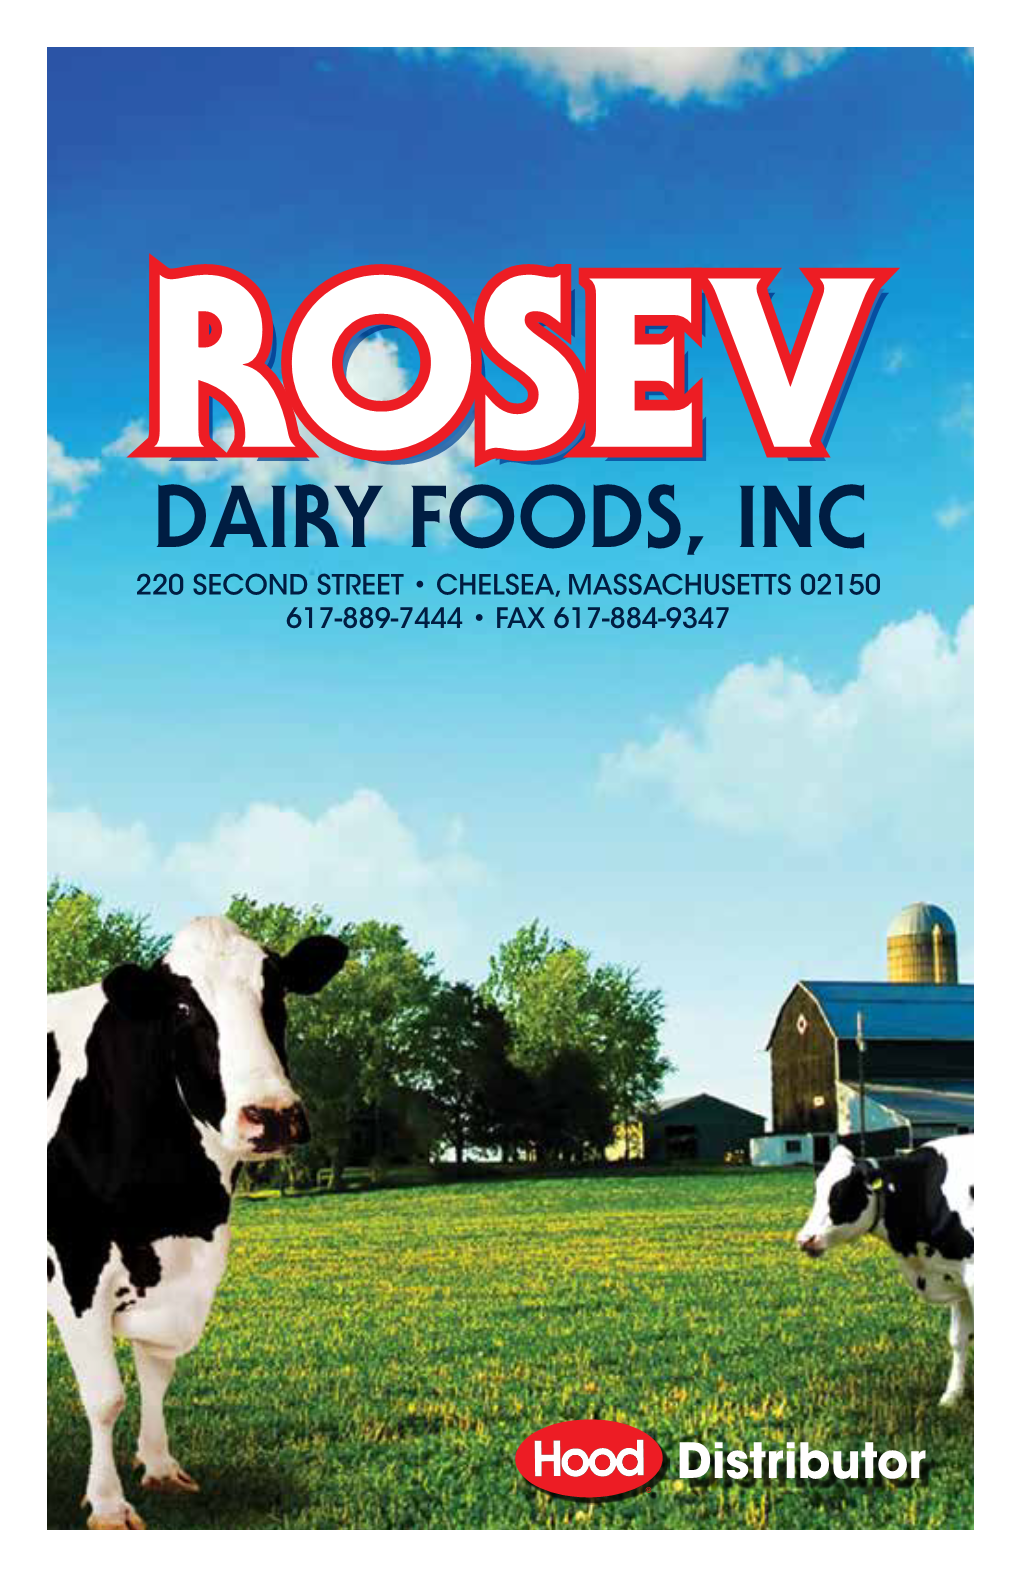 Dairy Foods, Inc 220 Second Street • Chelsea, Massachusetts 02150 617-889-7444 • Fax 617-884-9347